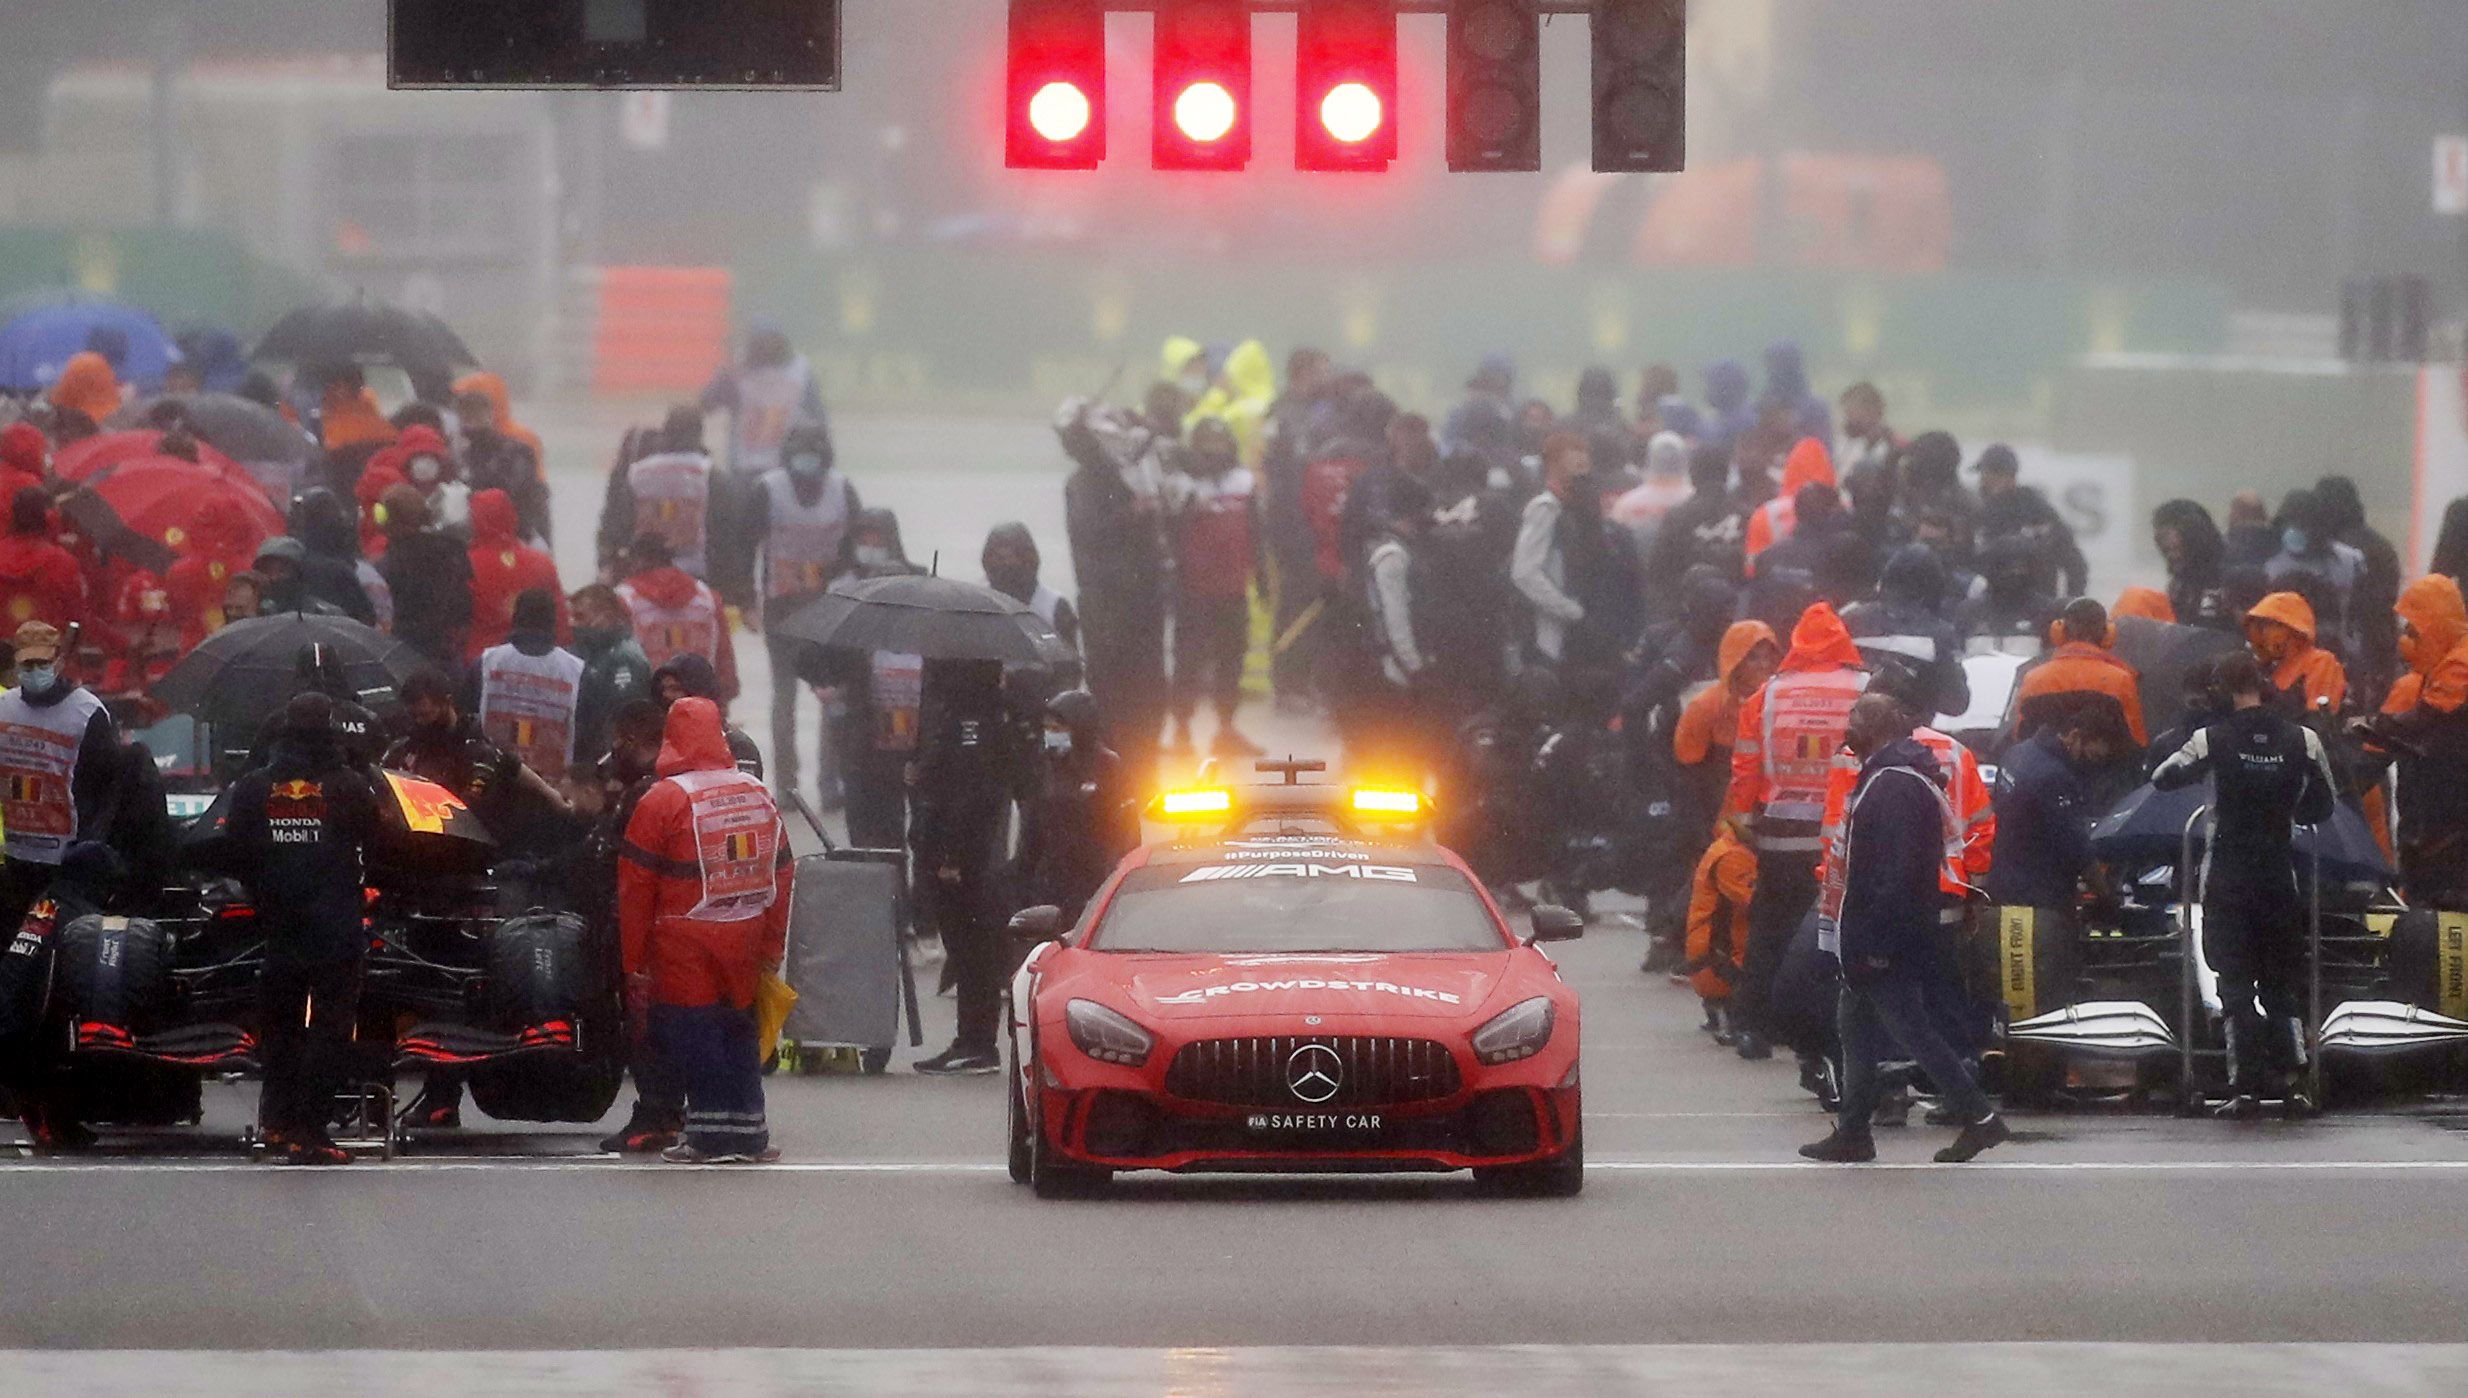 La grilla de partida bajo la lluvia. La pista estuvo muy complicada (REUTERS/Christian Hartmann)